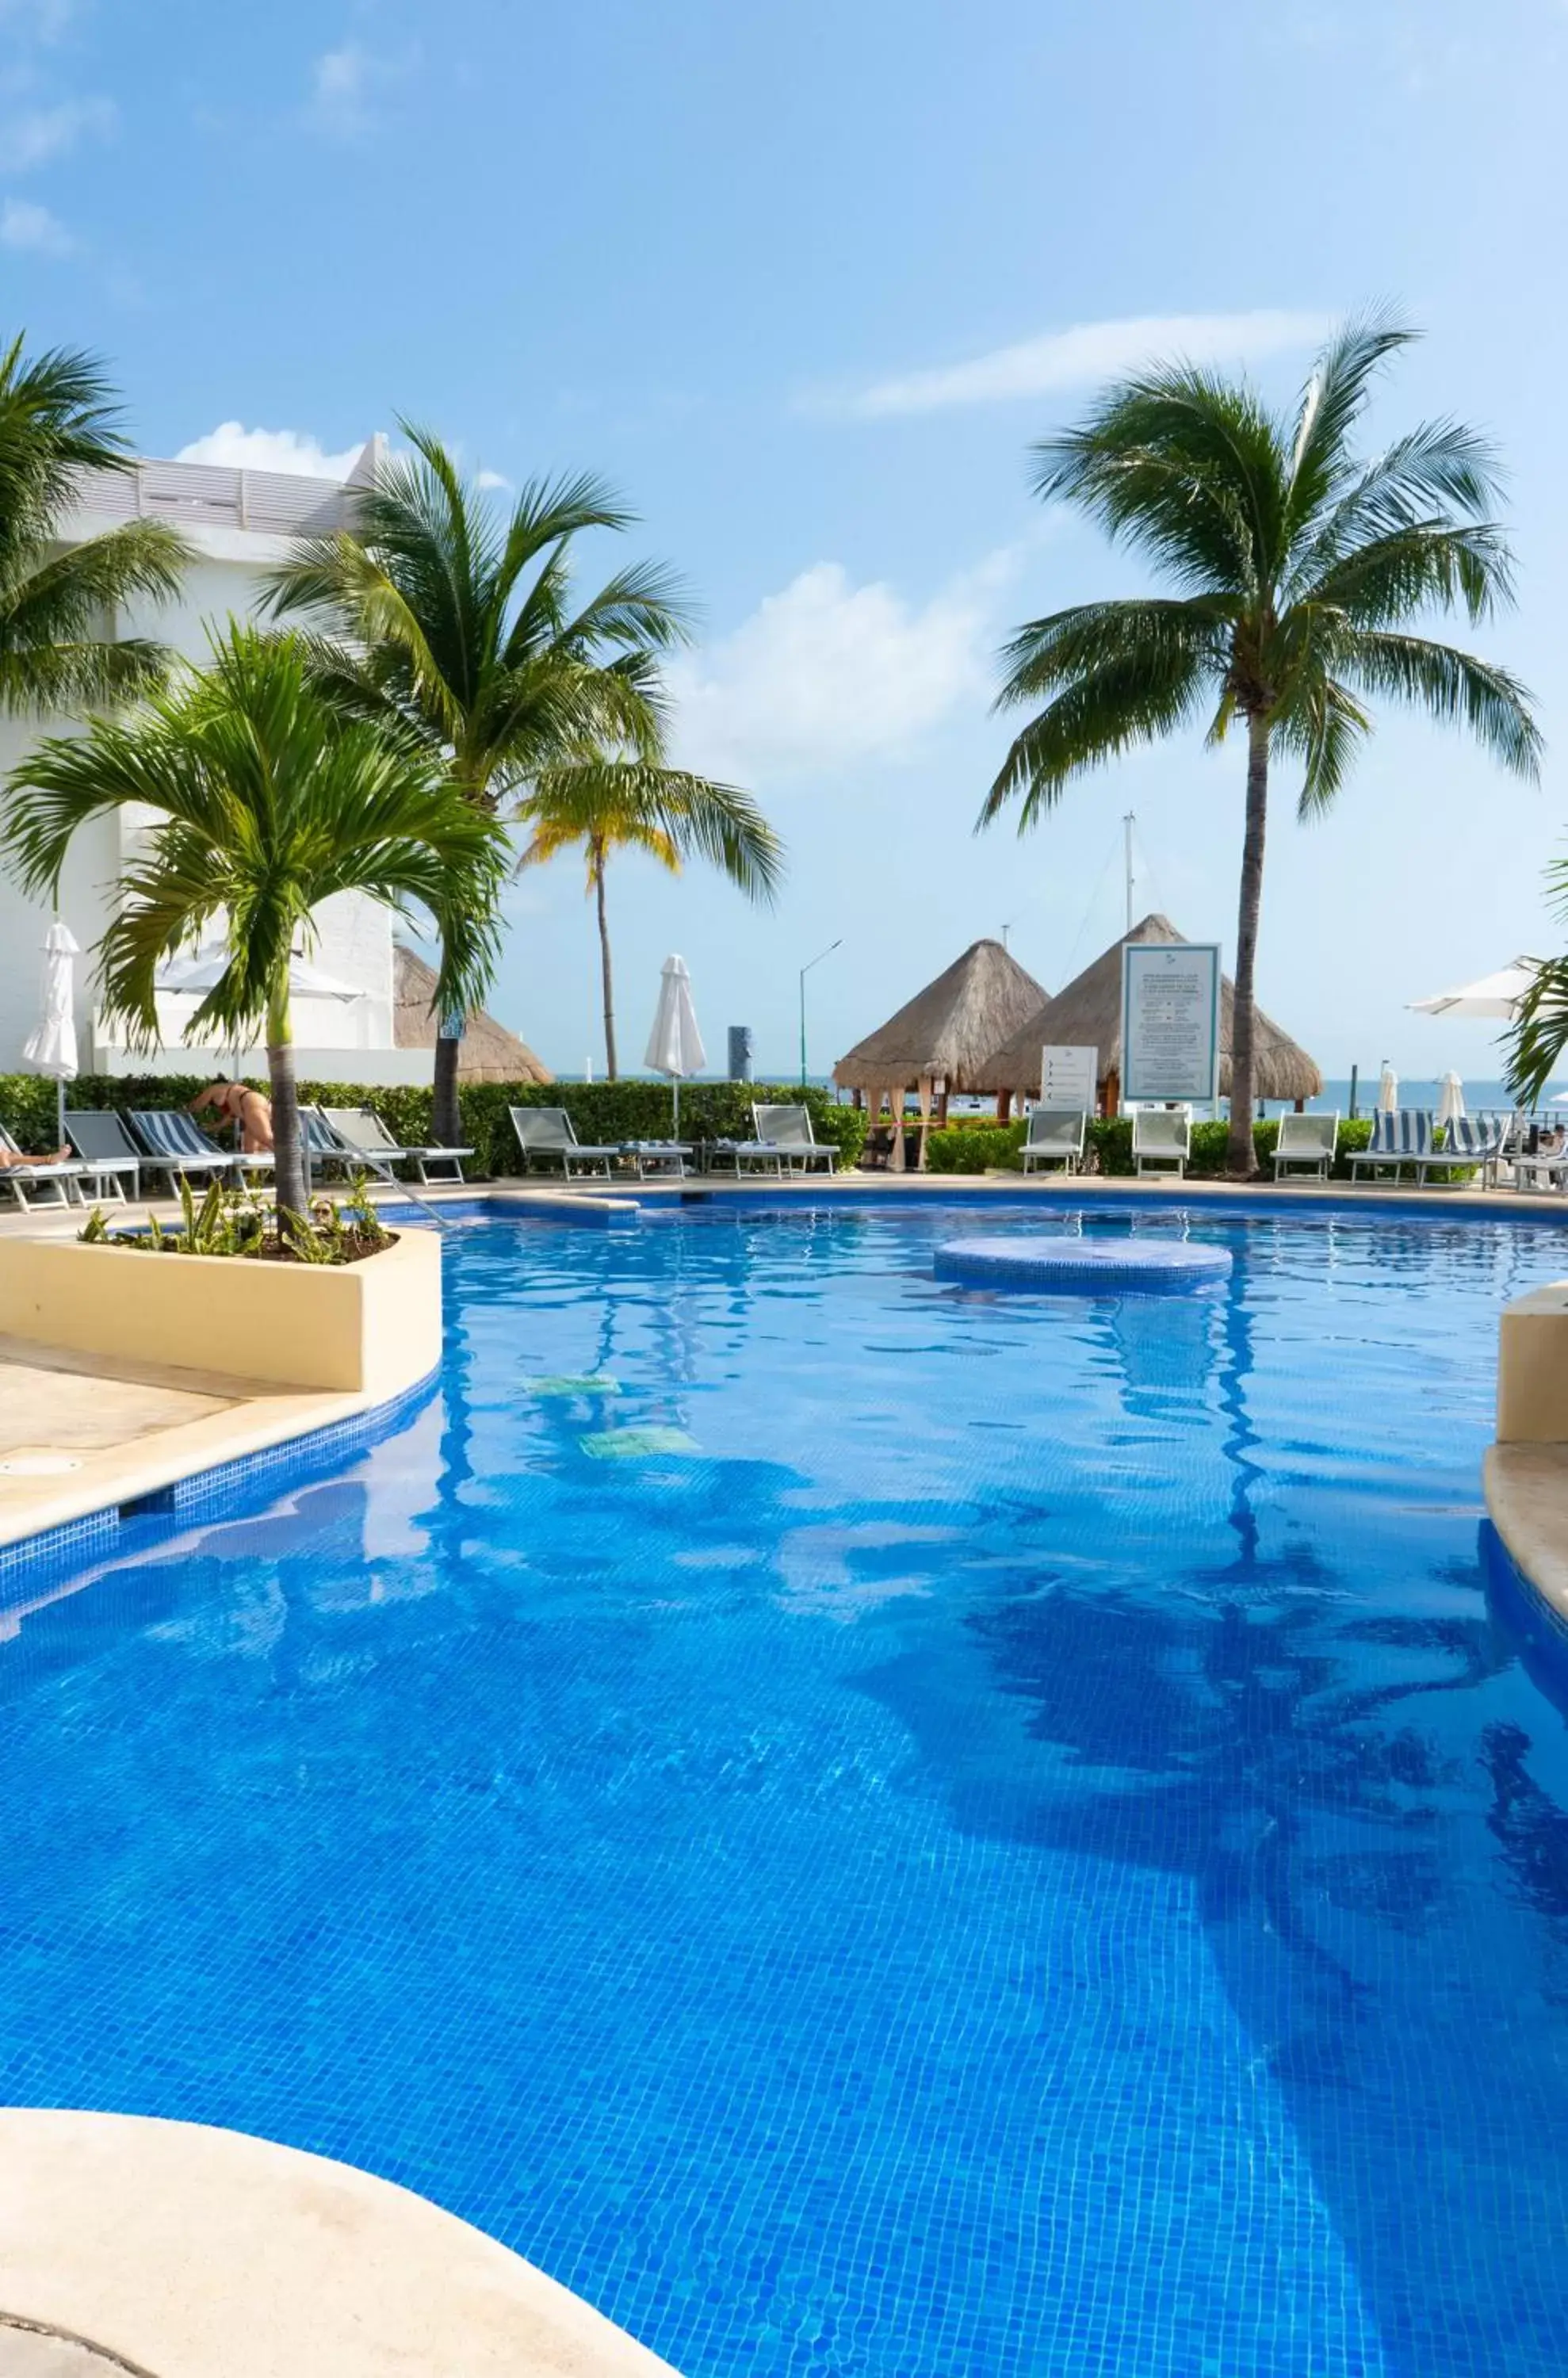 Swimming Pool in Cancun Bay Resort - All Inclusive